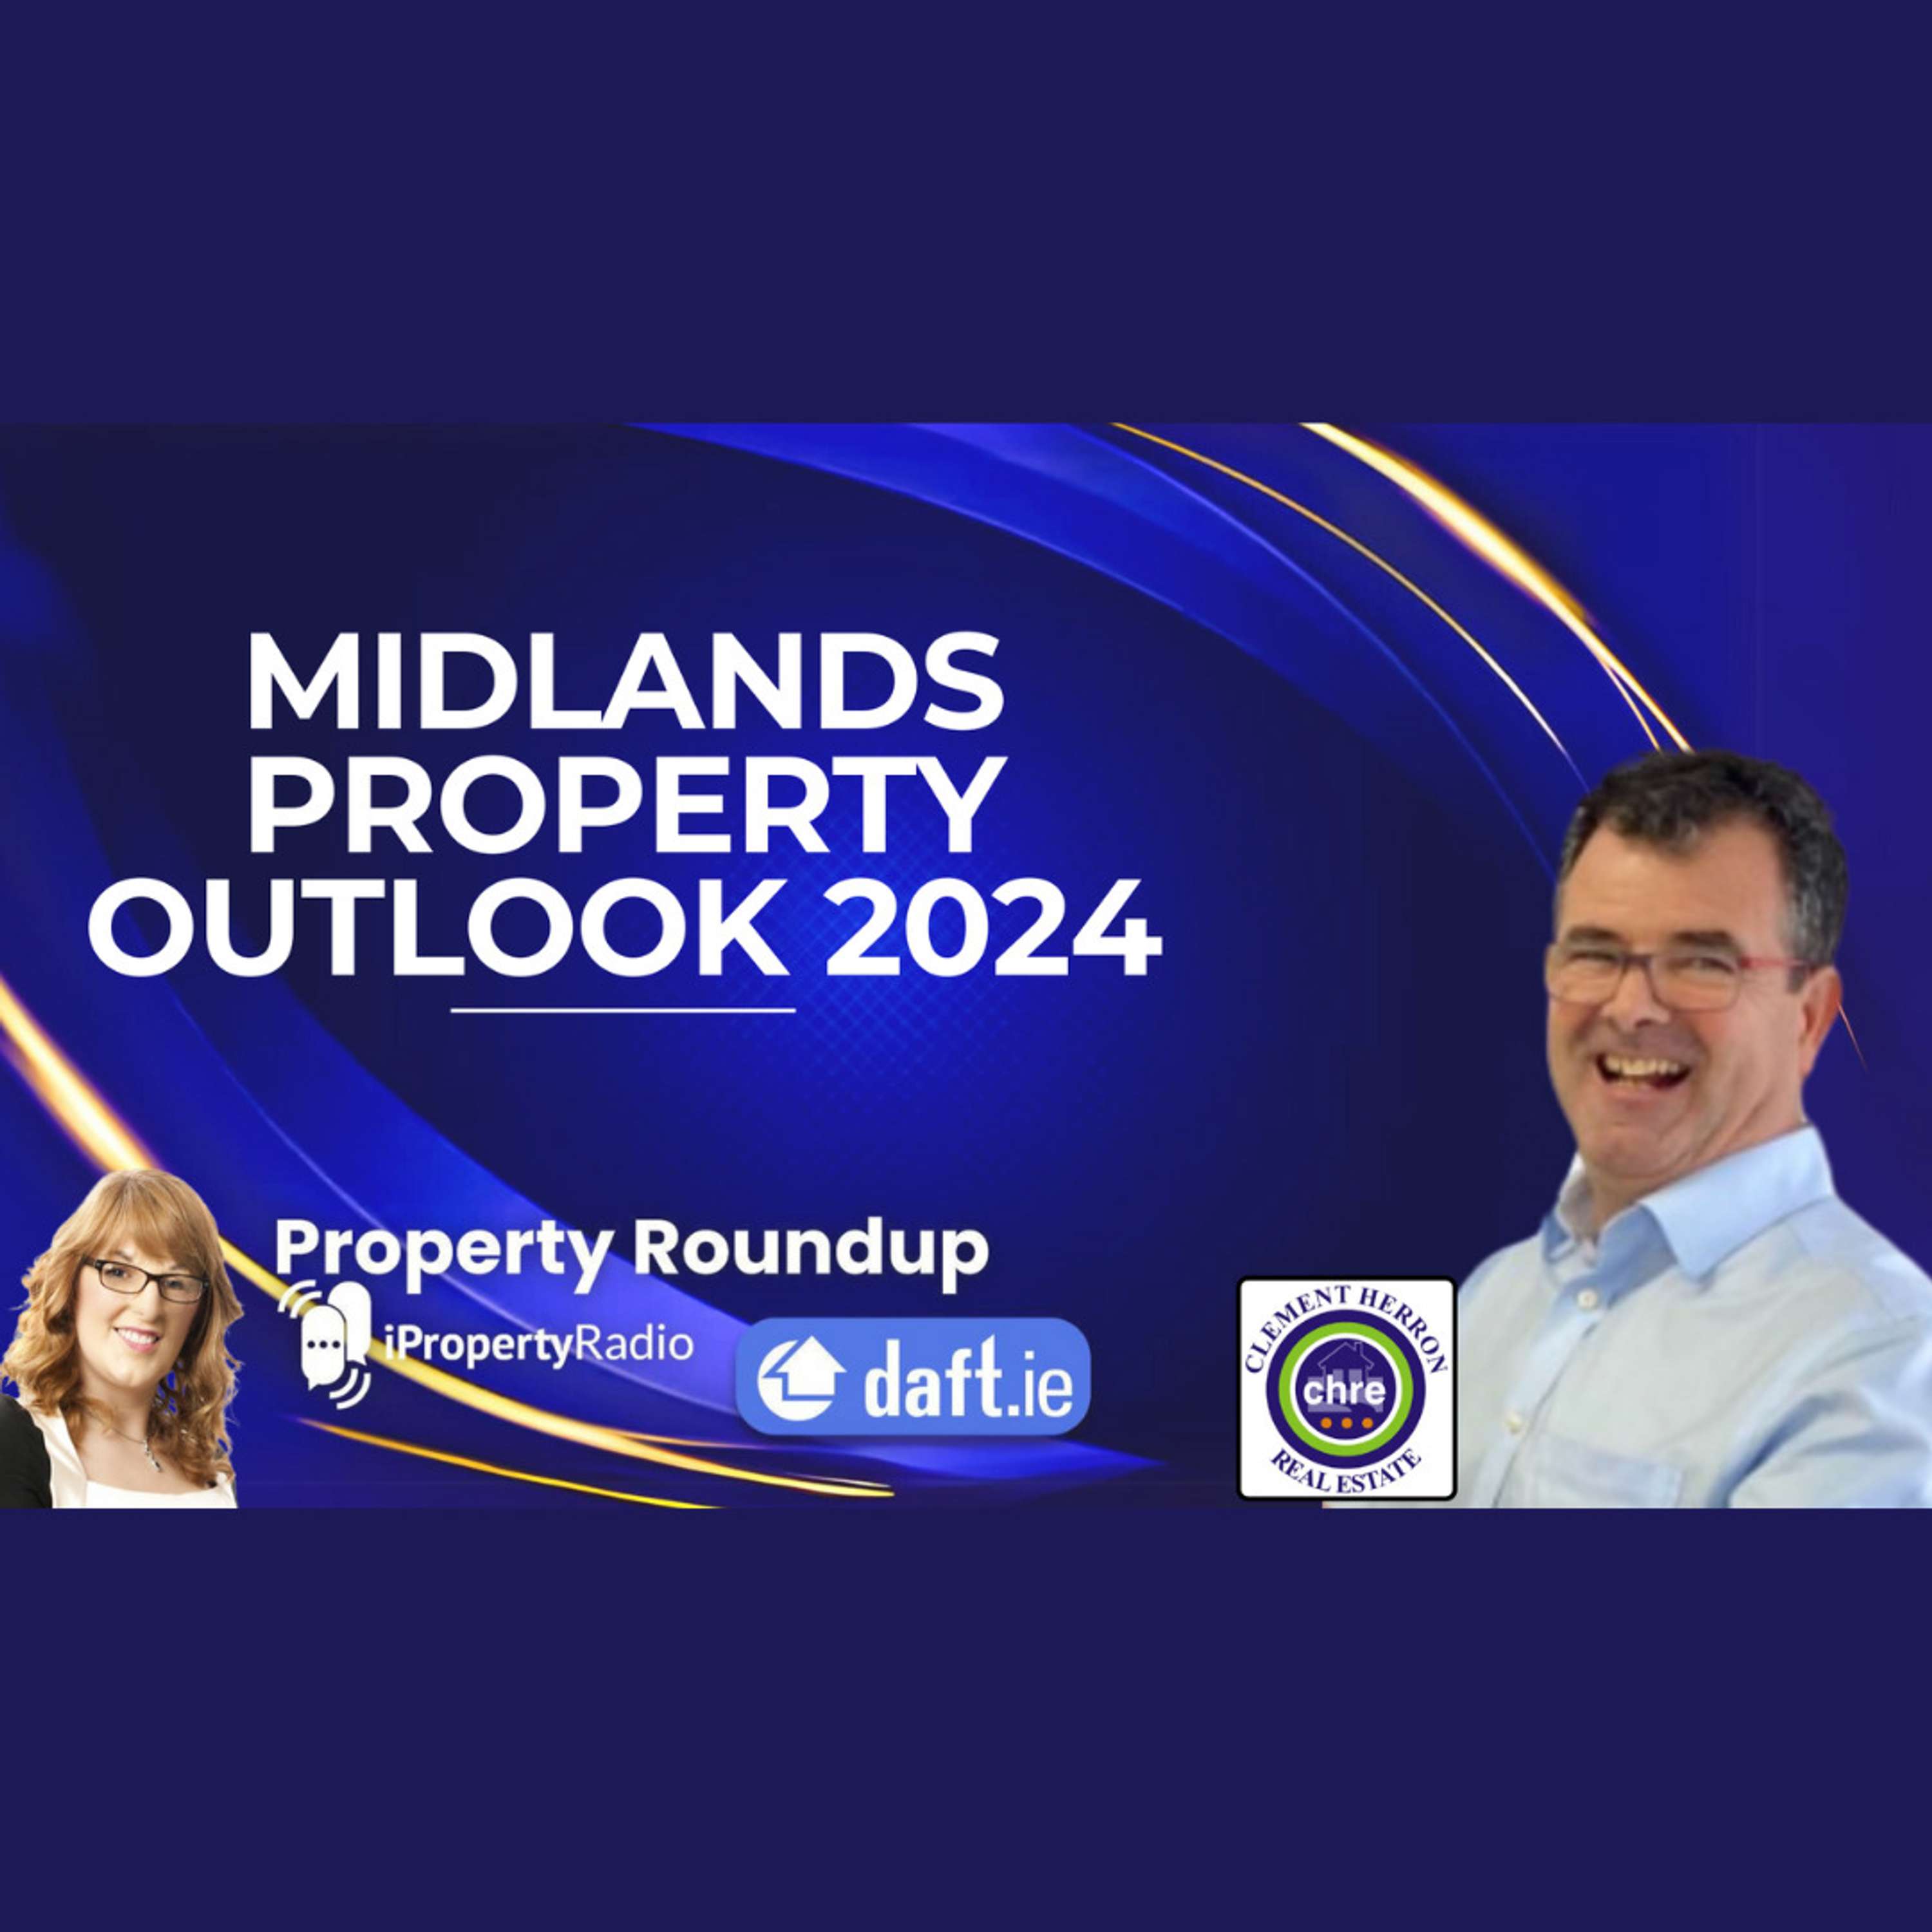 Midlands Property Outlook 2024